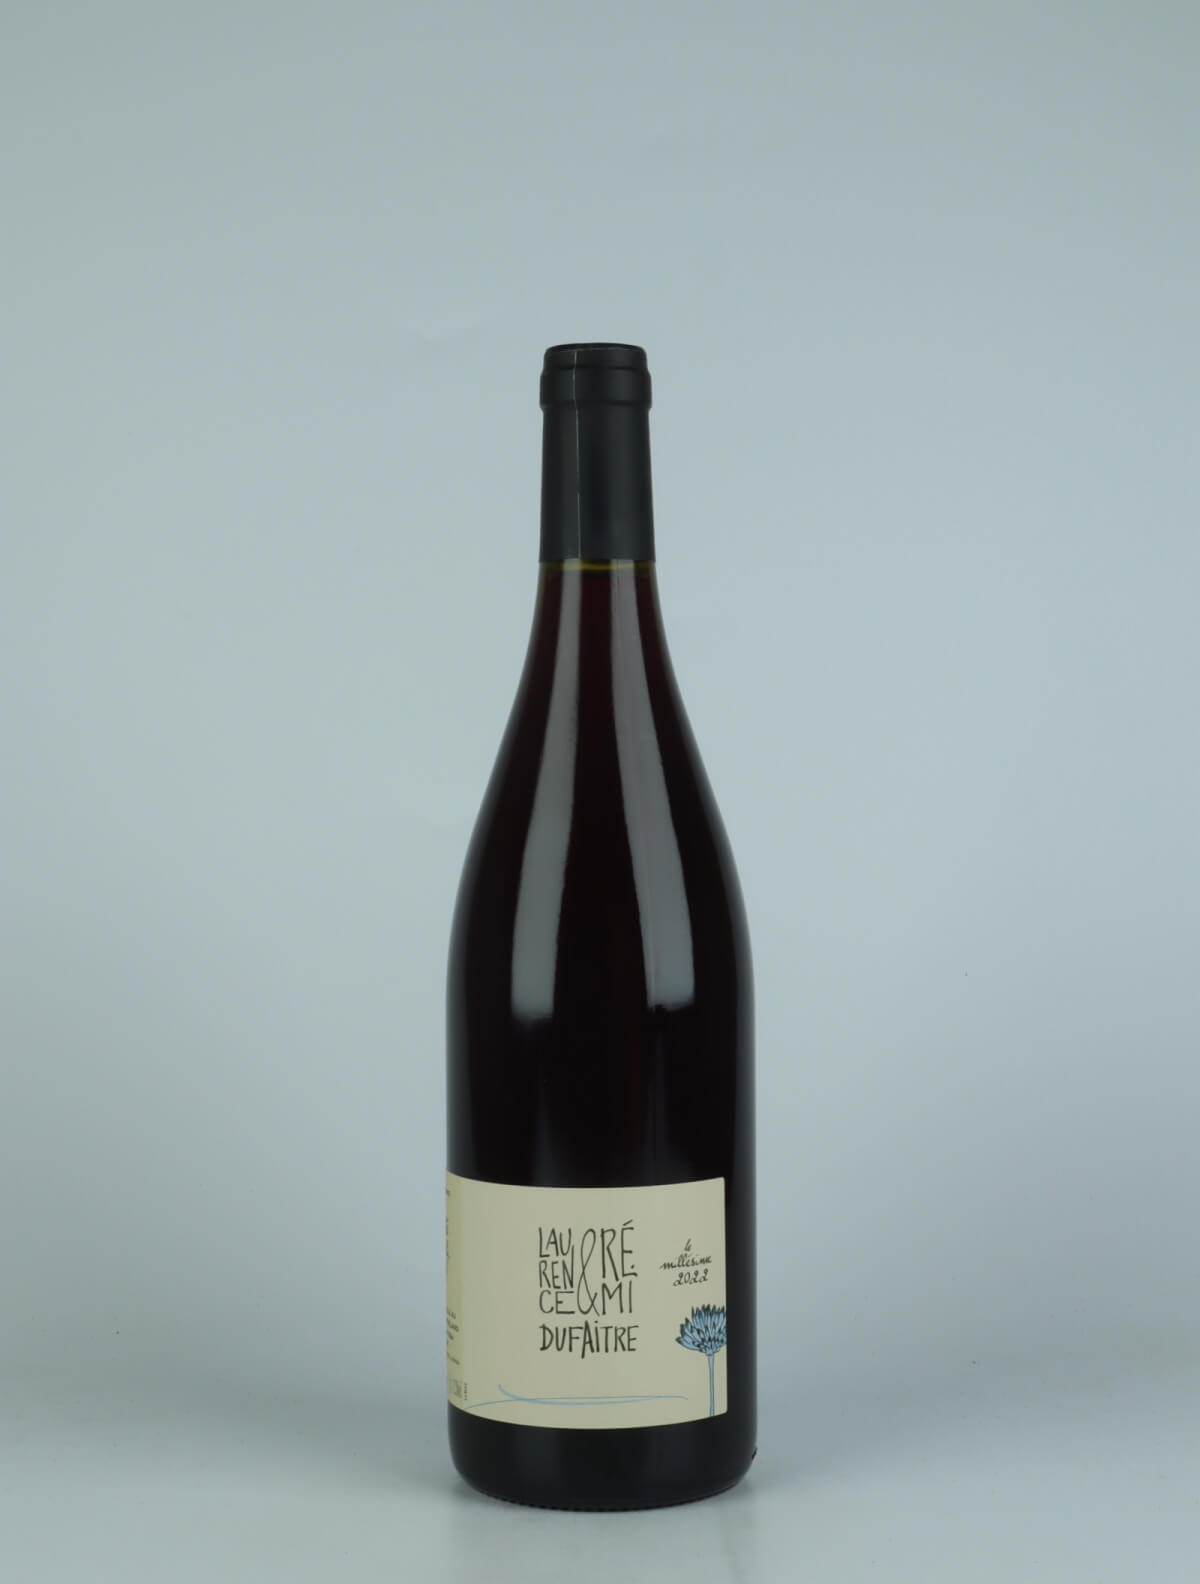 A bottle 2022 Côte de Brouilly Red wine from Laurence & Rémi Dufaitre, Beaujolais in France